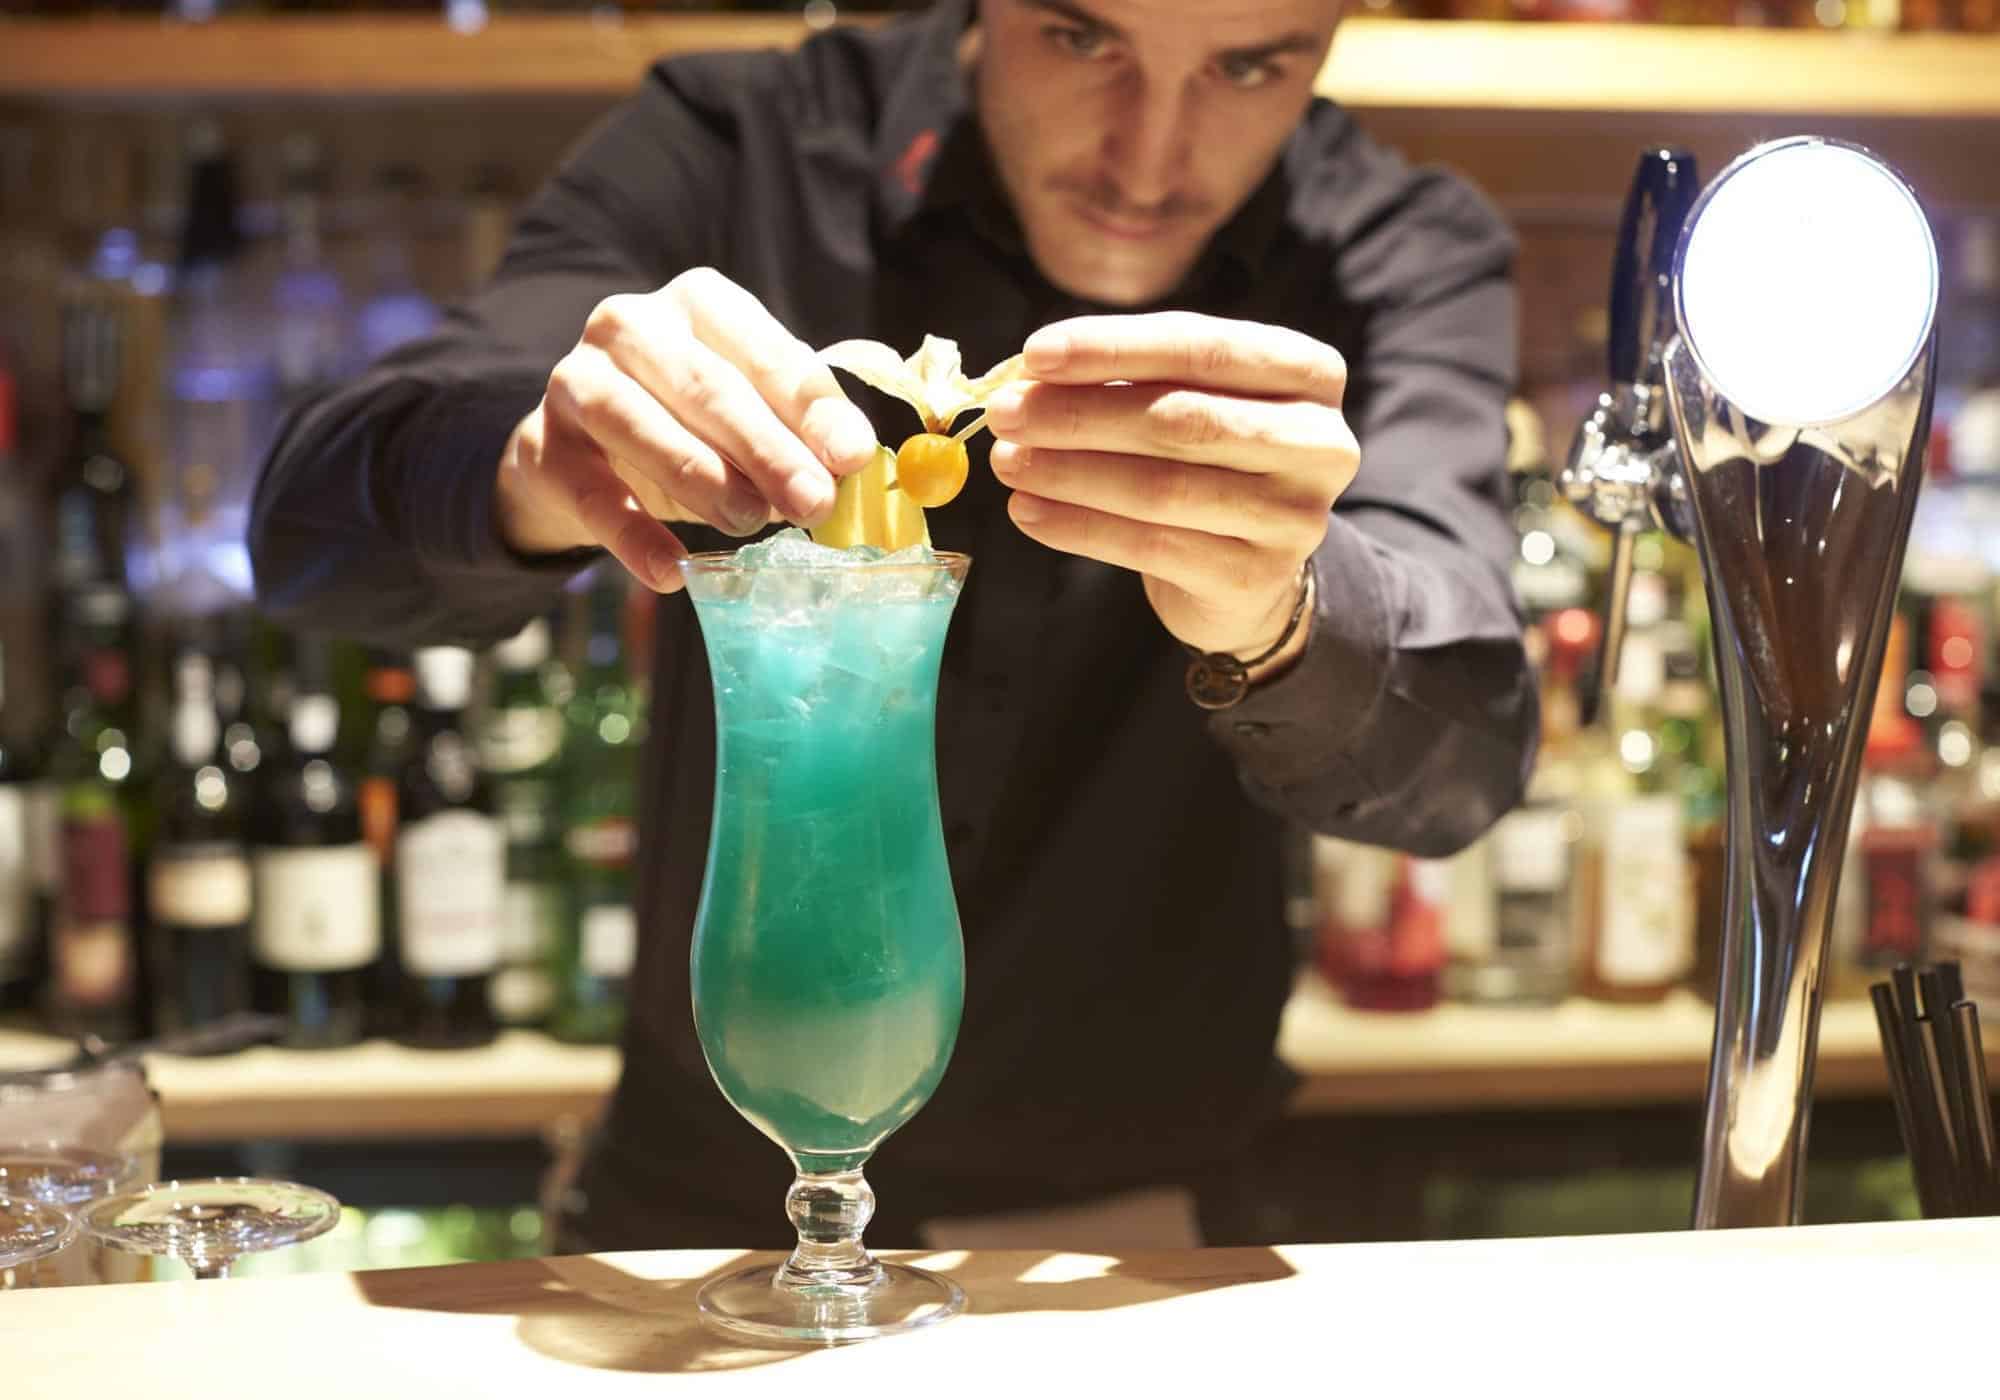 Hotel Rangá bartender adds garnish to bright blue cocktail at the Rangá Bar.